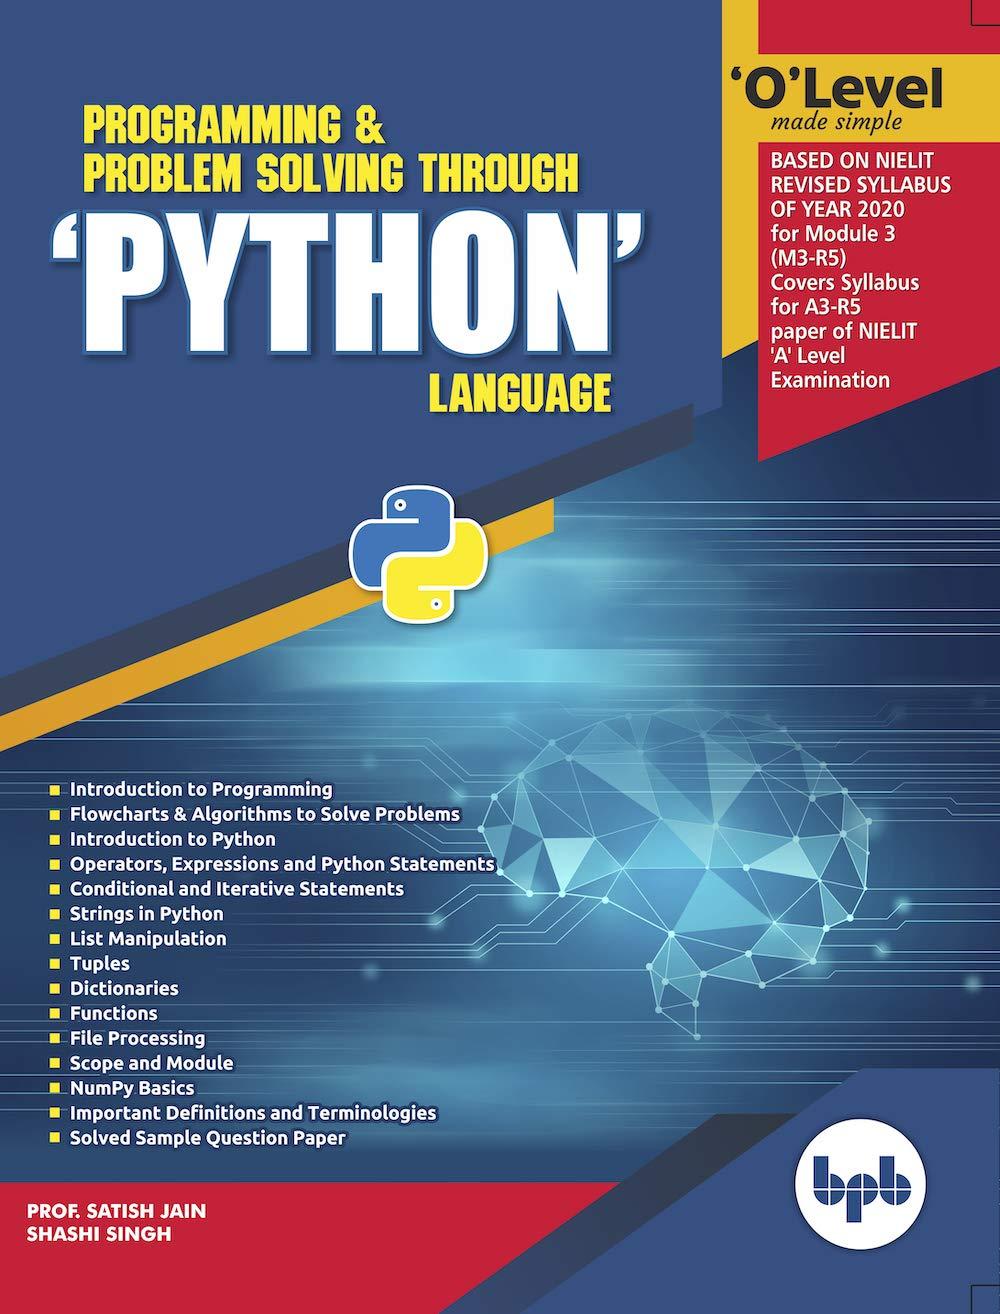 o level made simple programming and problem solving through python language 1st edition shashi singh, satish